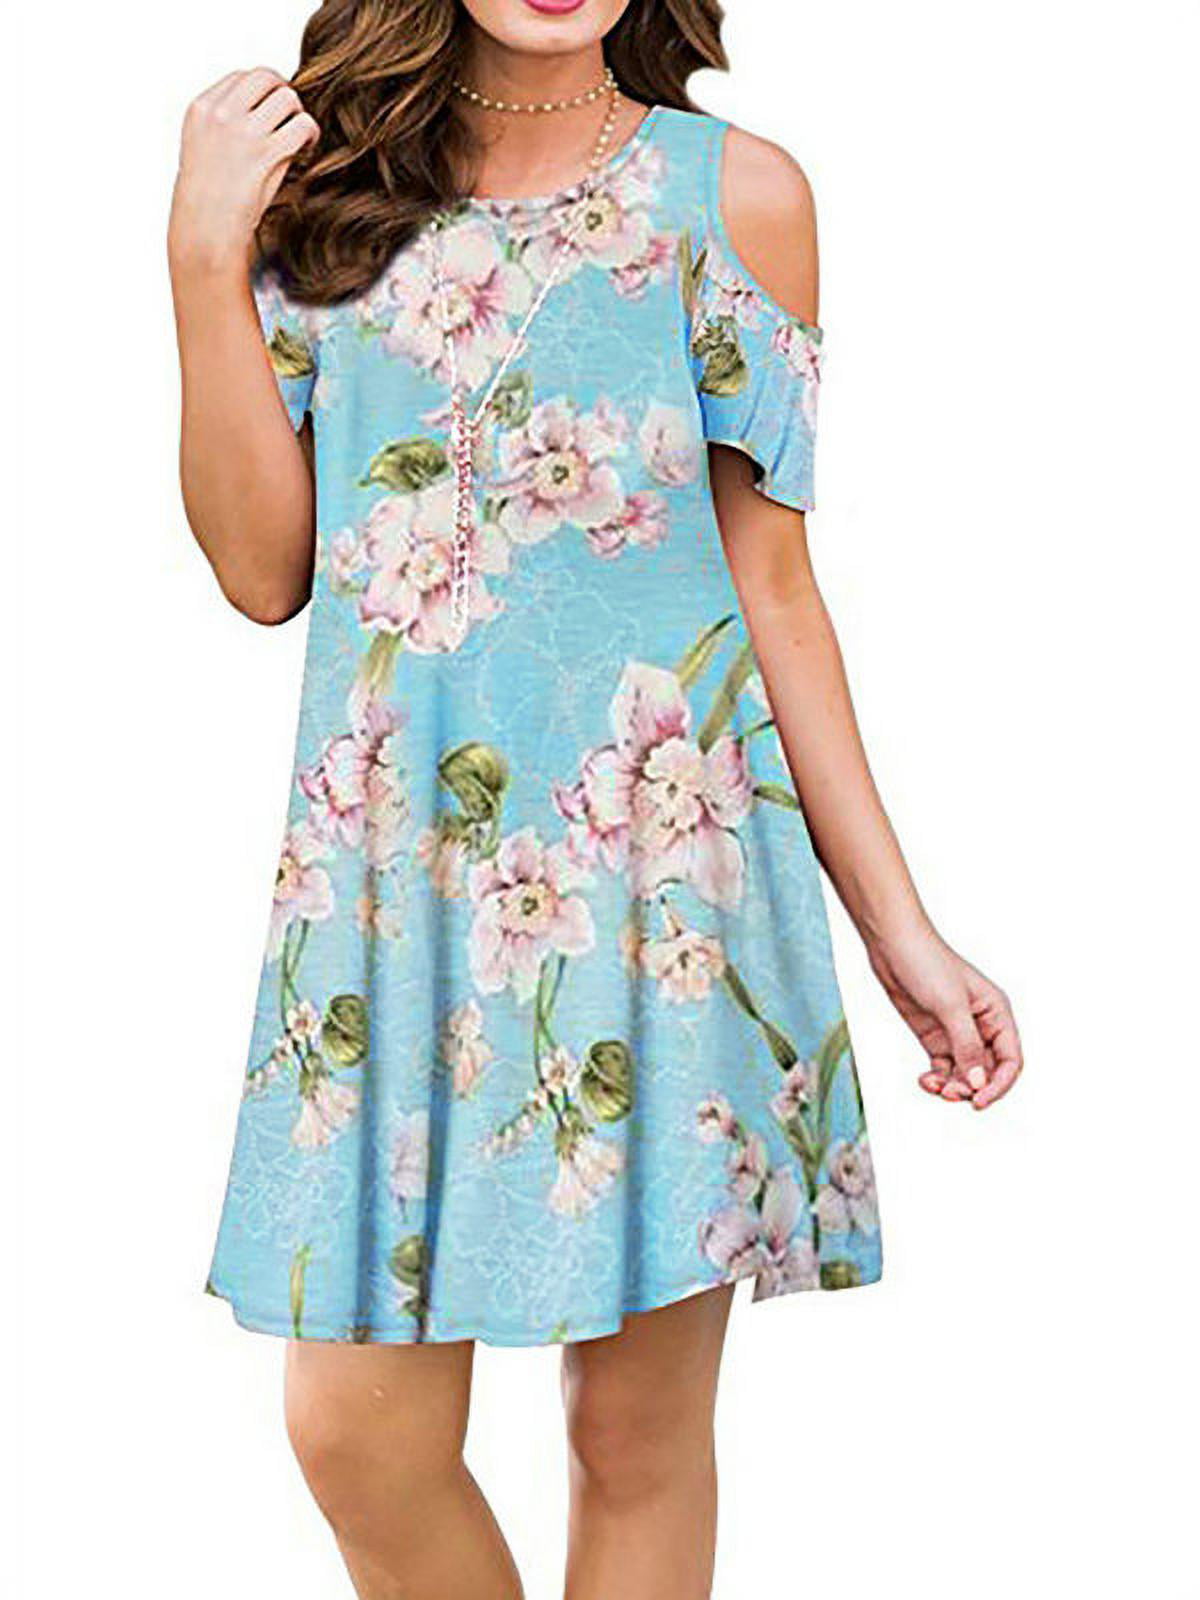 Enwejyy Women Daily Clod Shoulder Round Neck Floral Print Dress ...